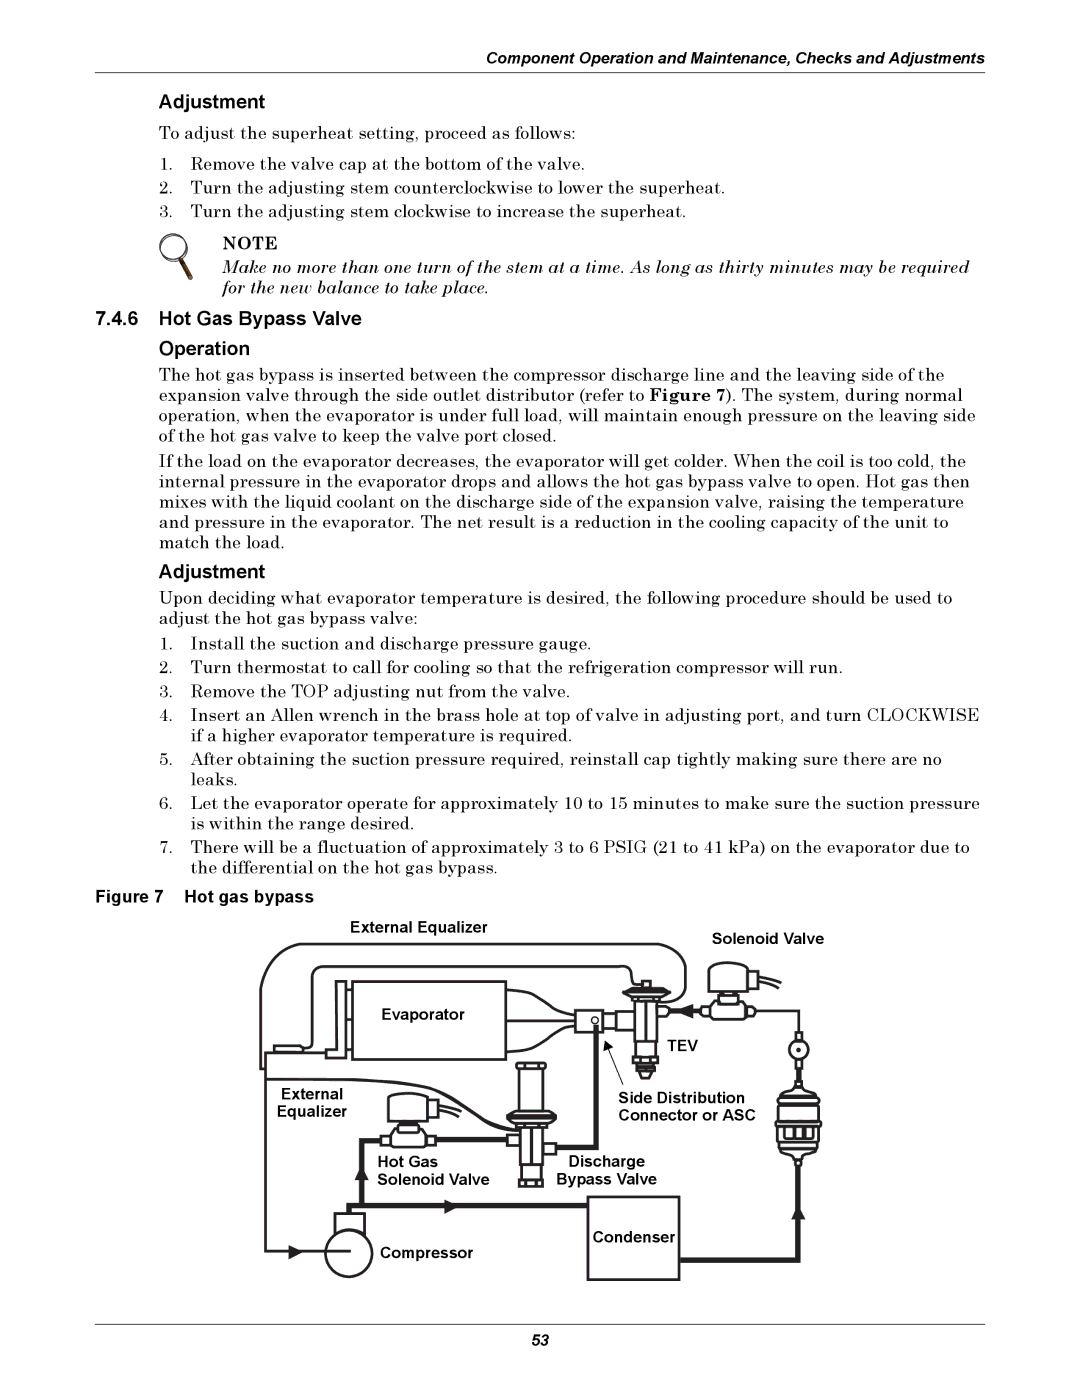 Emerson DE, VH, VE, DH manual Adjustment, Hot Gas Bypass Valve Operation 